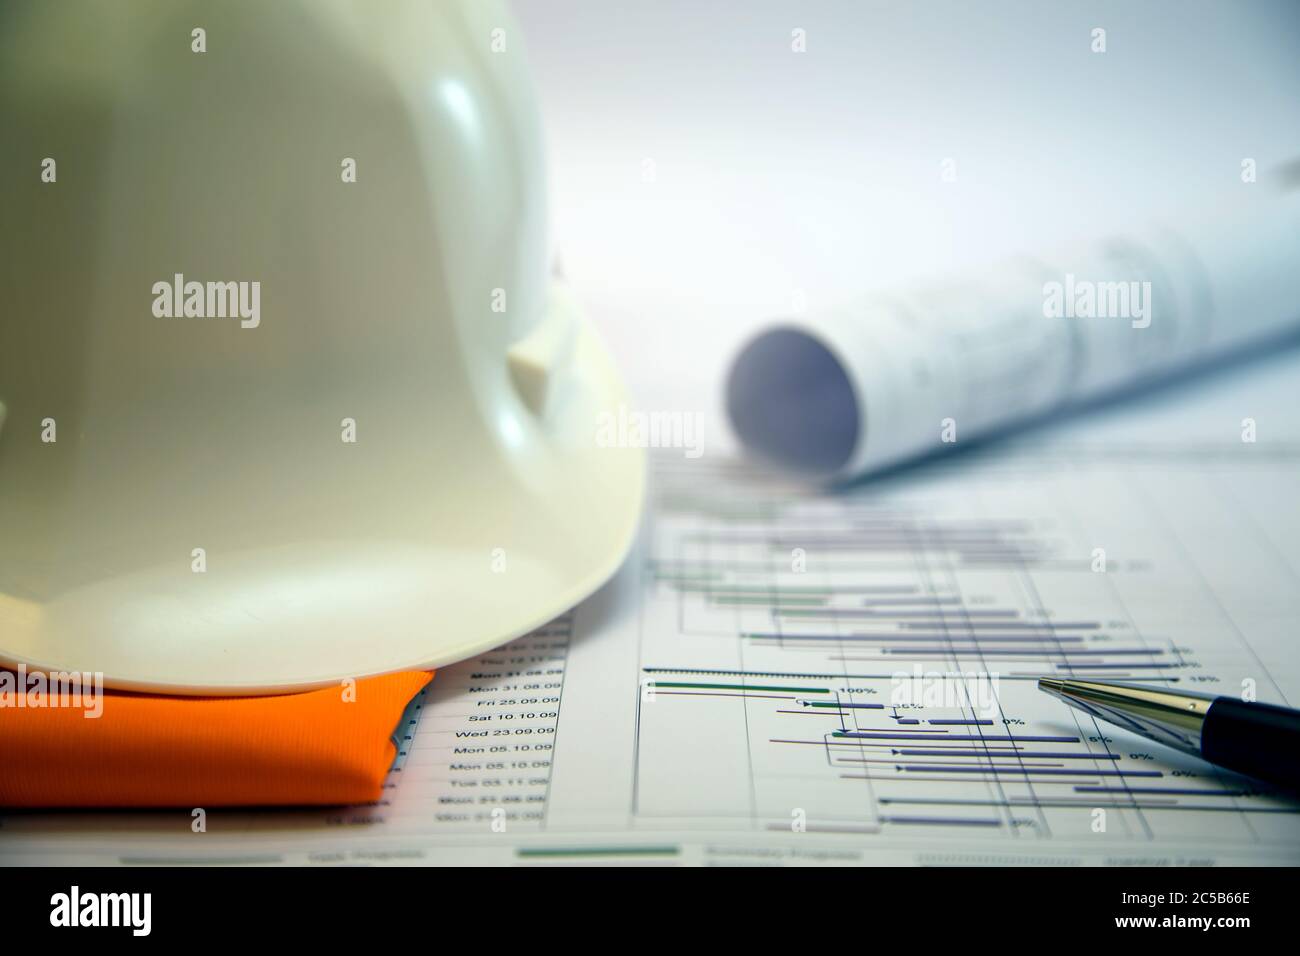 Construction project planning, management concept, gantt chart schedule, blueprints, helmet, calculator different management tools Stock Photo